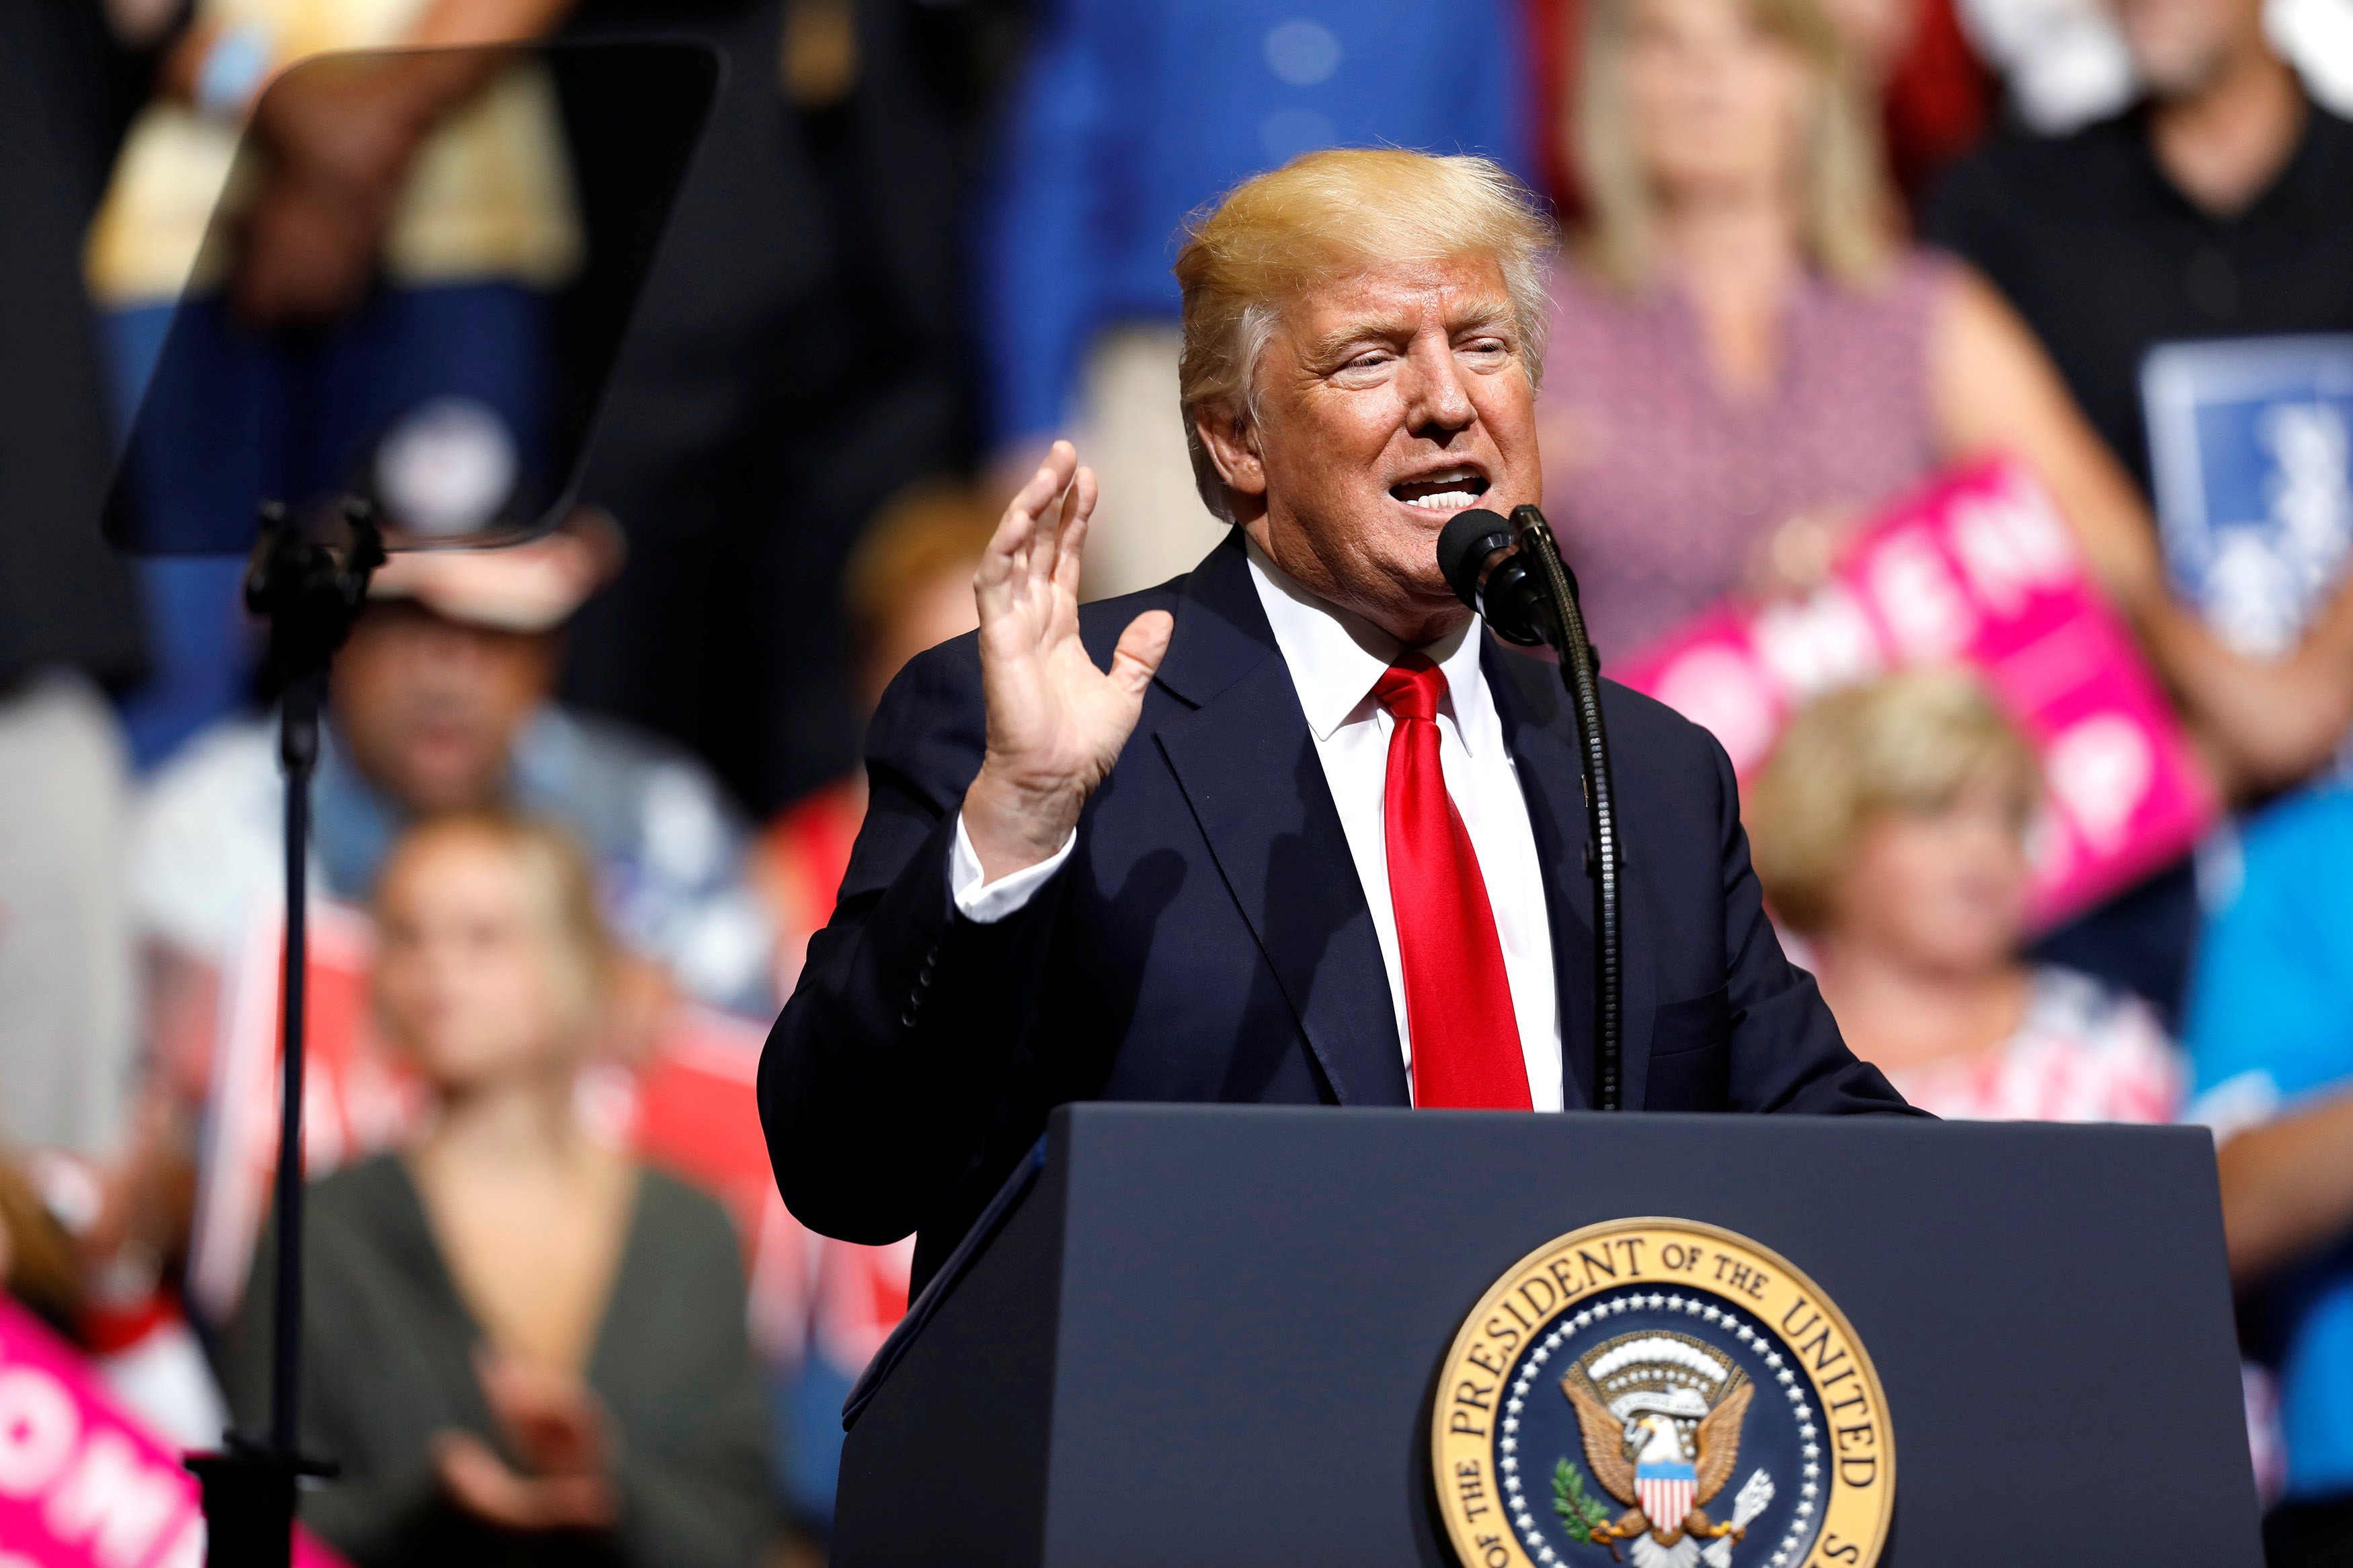 U.S. President Donald Trump speaks during a rally at the U.S. Cellular Center in Cedar Rapids, Iowa, U.S. June 21, 2017. REUTERS/Scott Morgan - RTS184M3